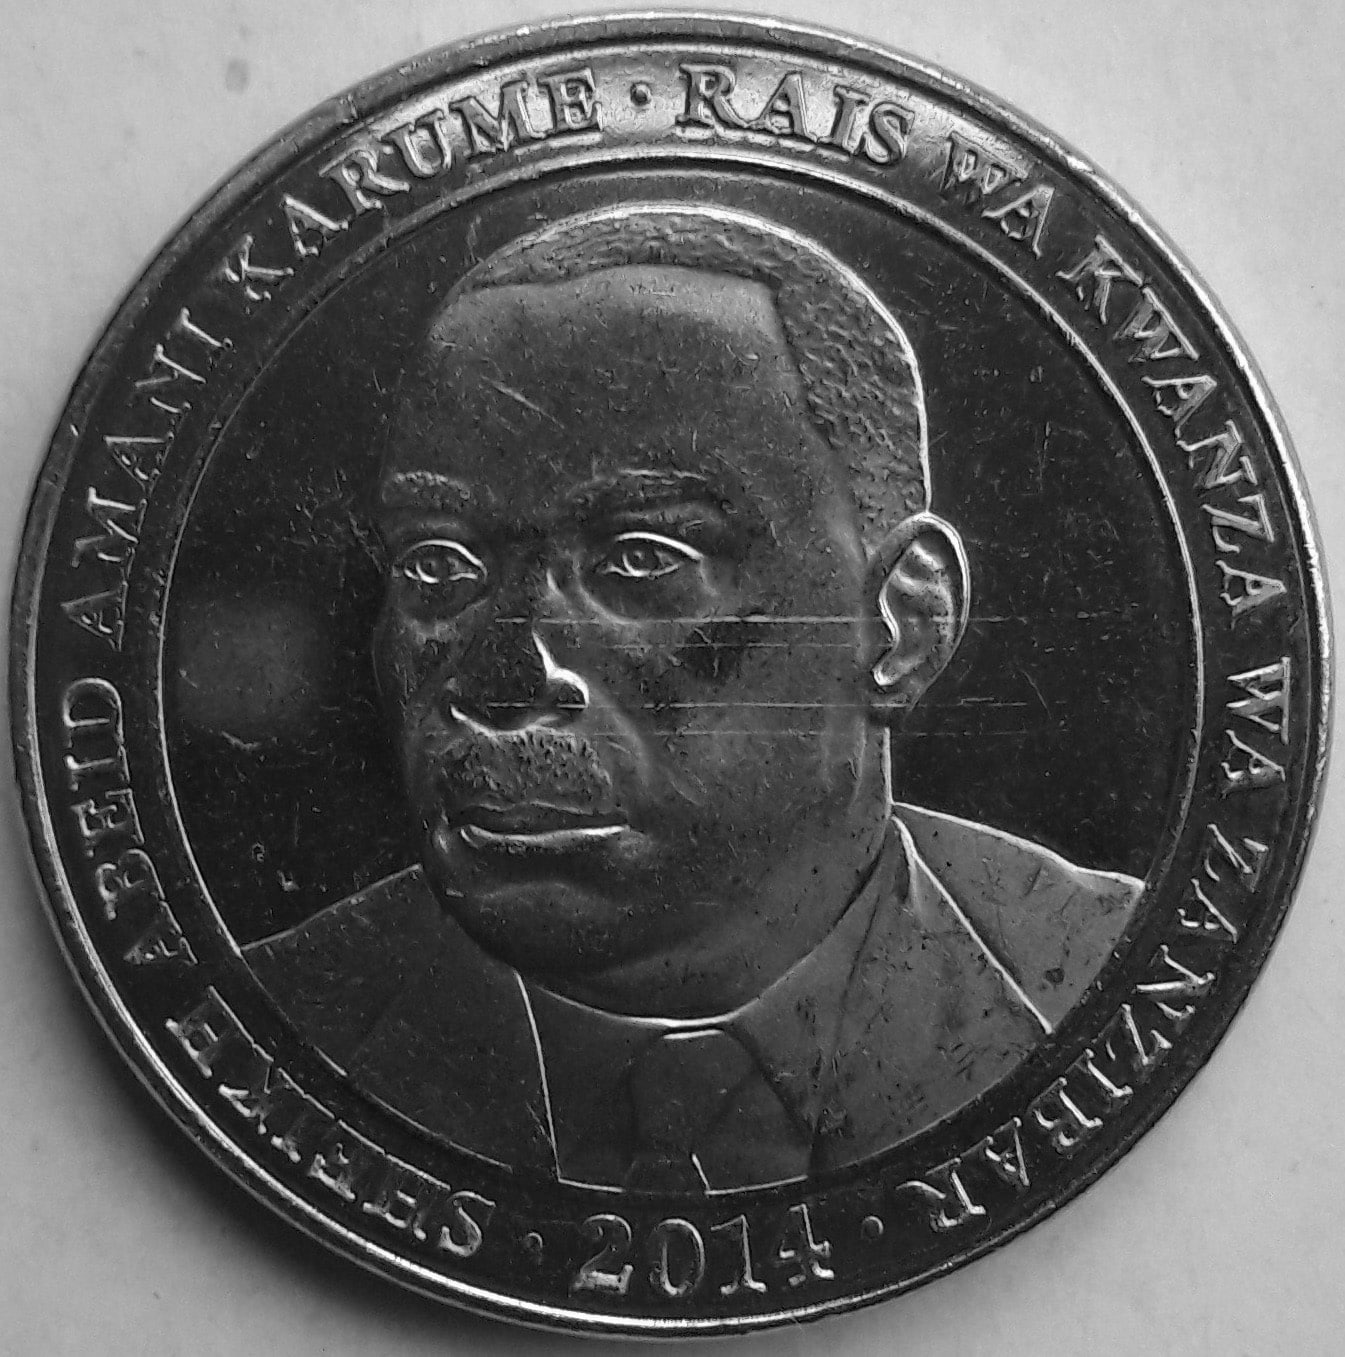 Tanzania 500 shilling coin